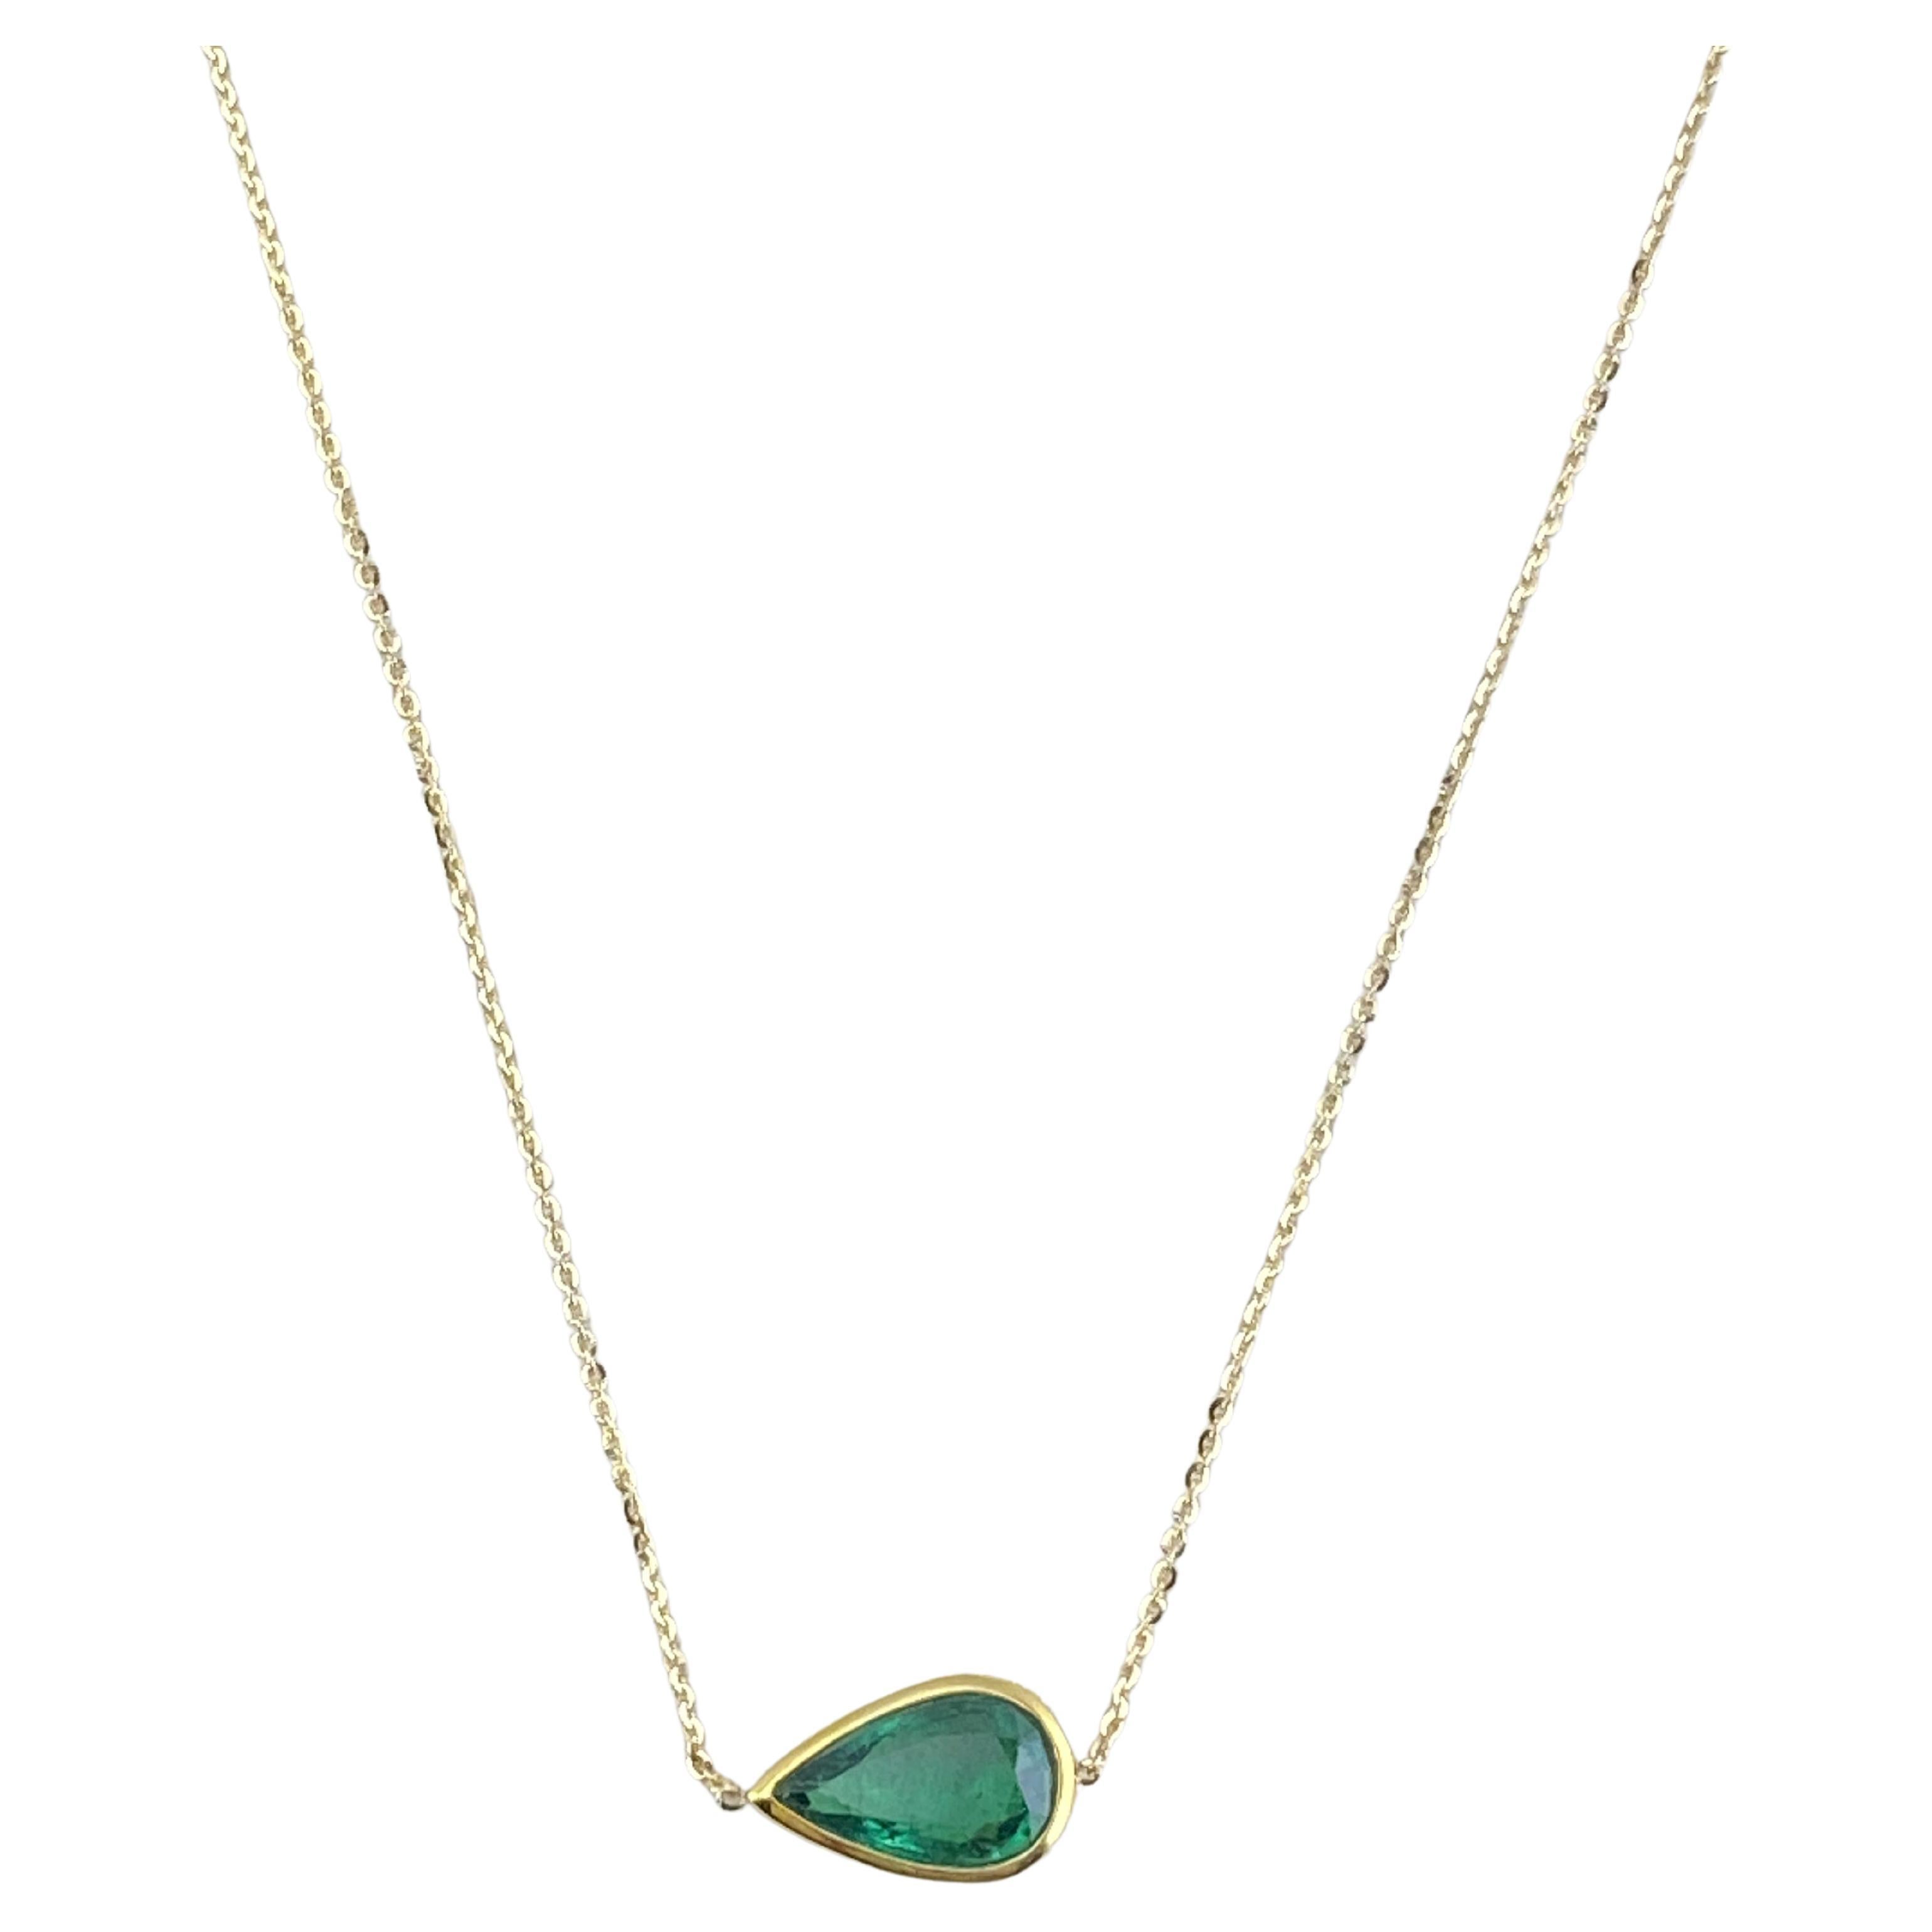 Certified 1.65 Carat Pear Shape Emerald Pendant Chain Necklace For Sale